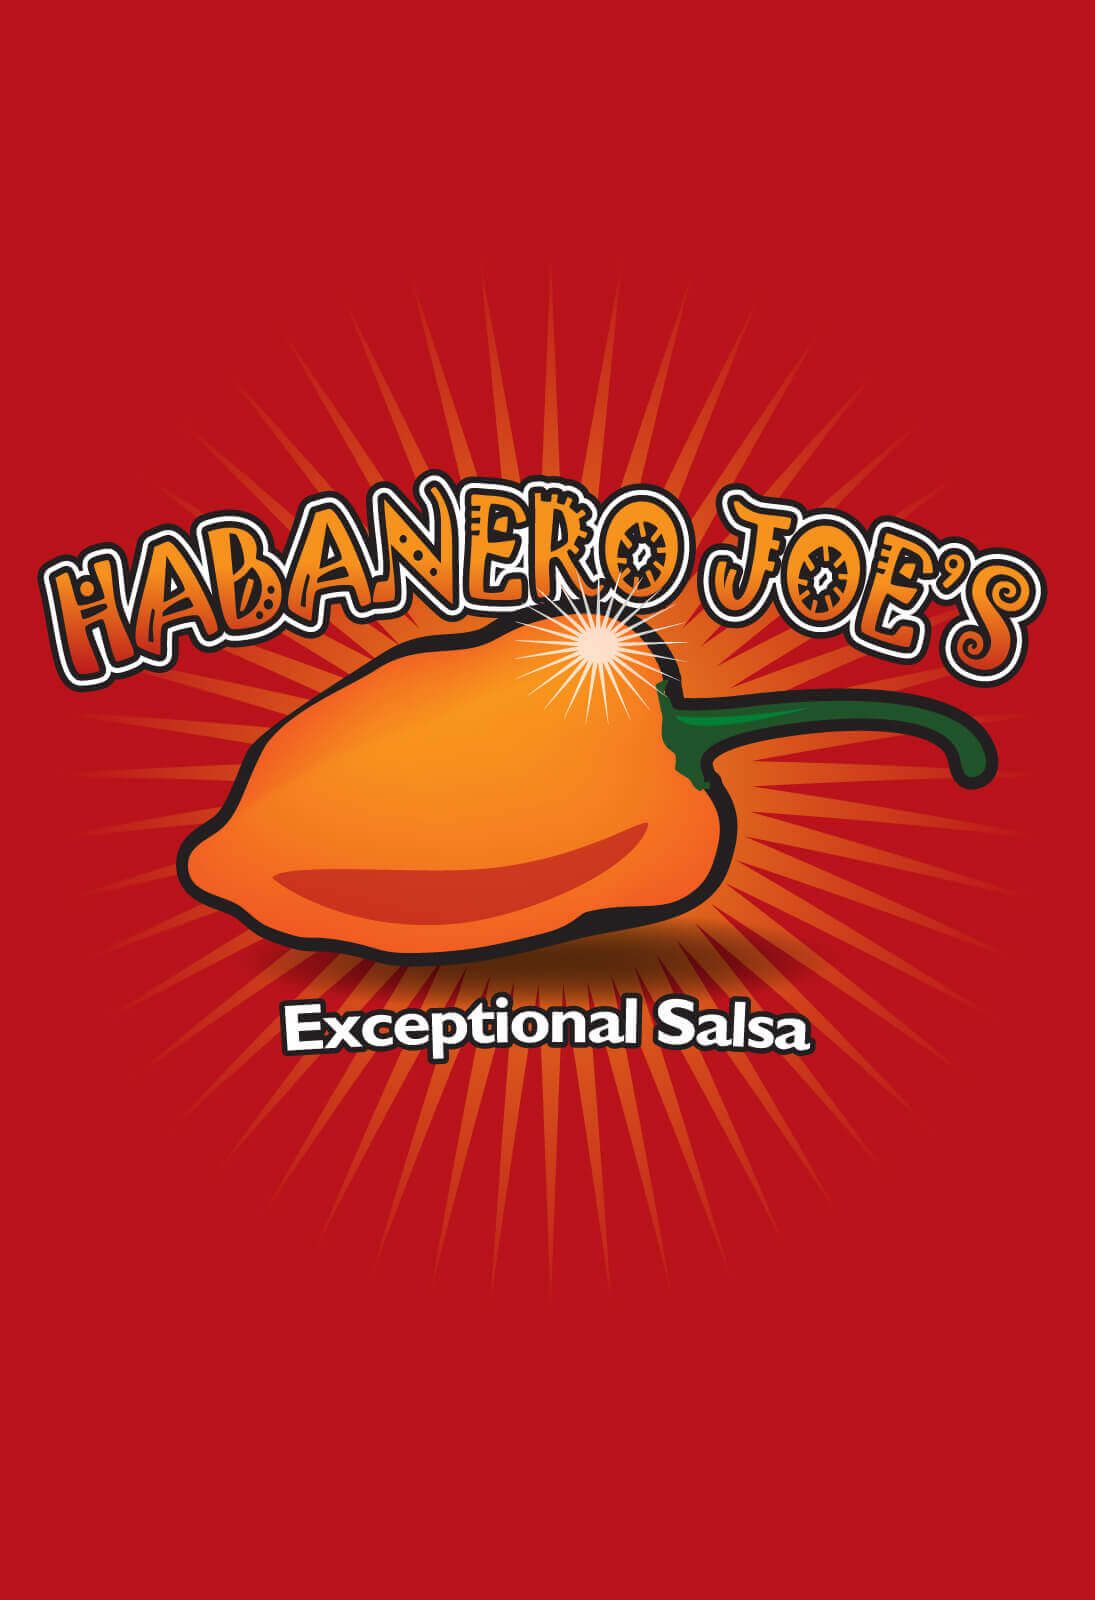 Packaging Habanero Joes Salsa